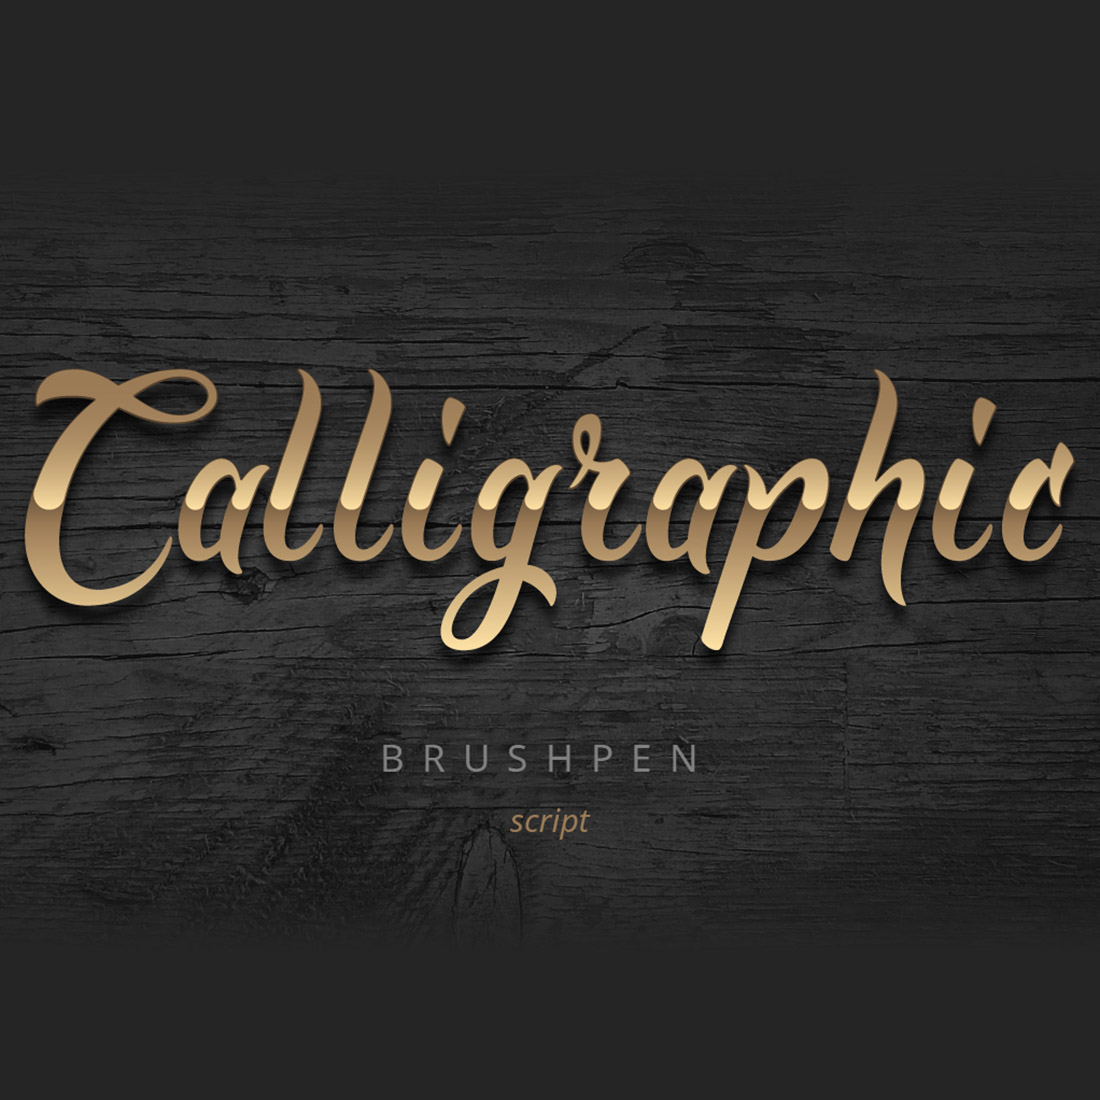 Font Calligraphy Golden Brush Design cover image.